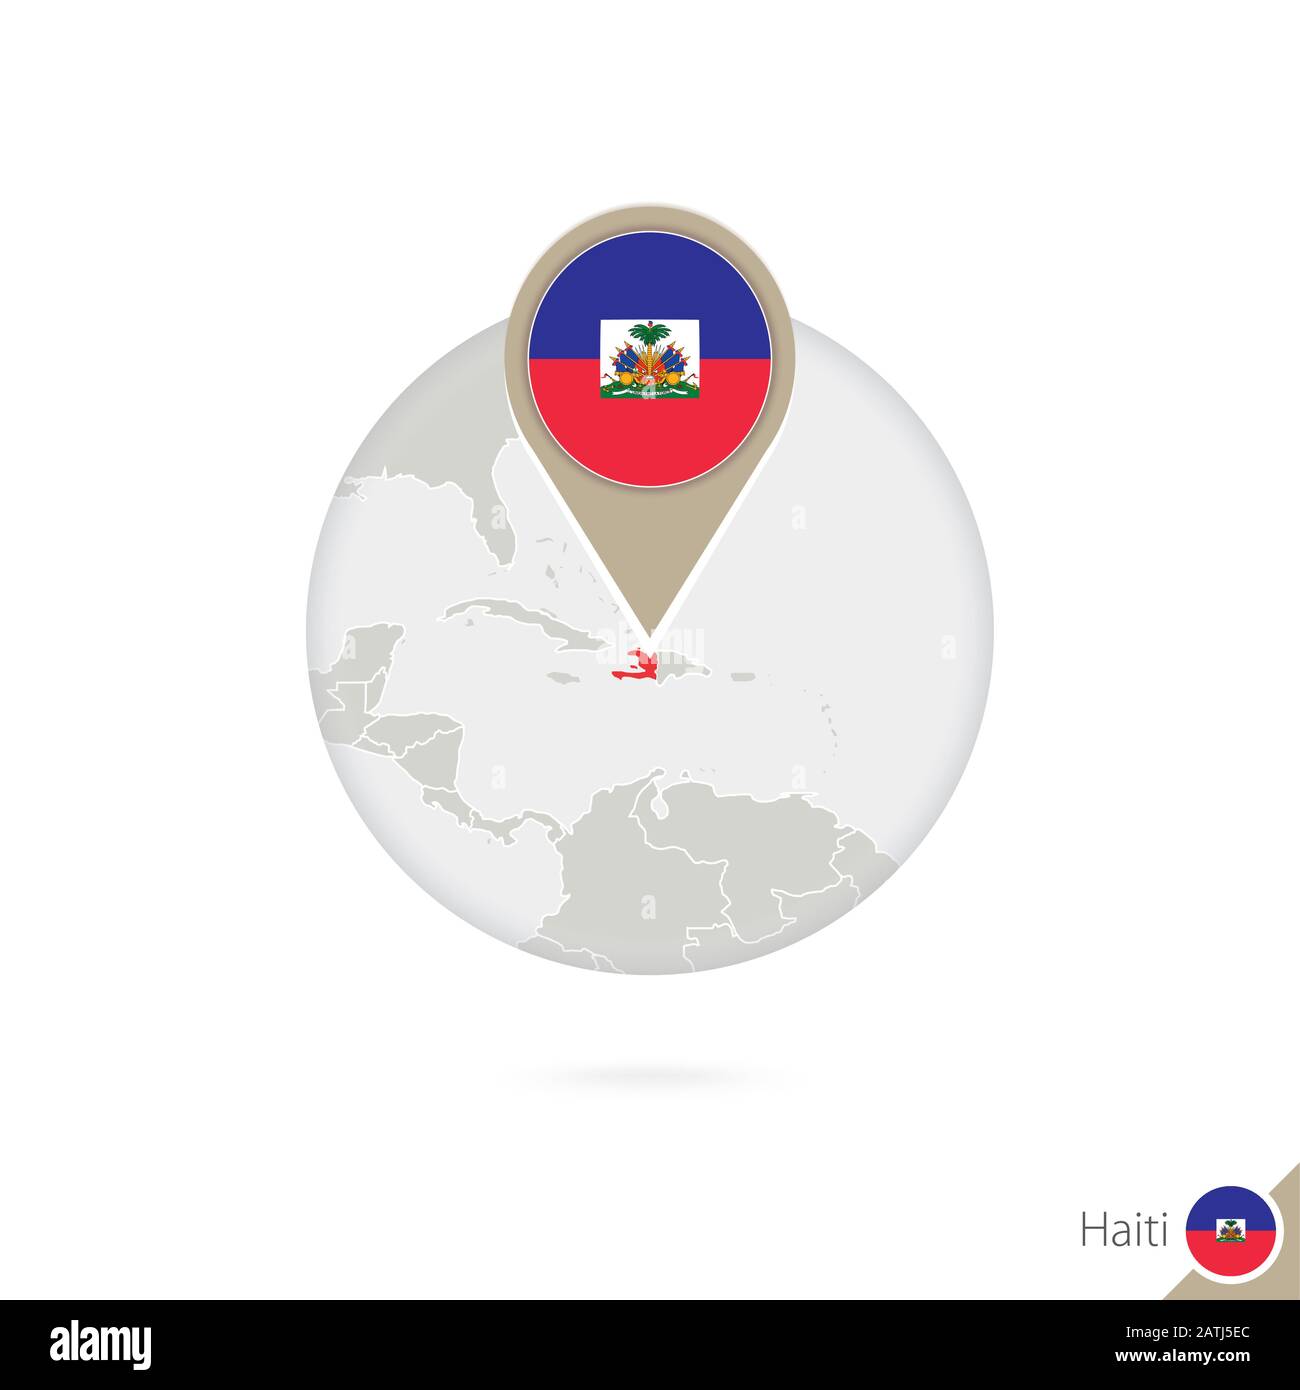 Haiti map and flag in circle. Map of Haiti, Haiti flag pin. Map of Haiti in the style of the globe. Vector Illustration. Stock Vector